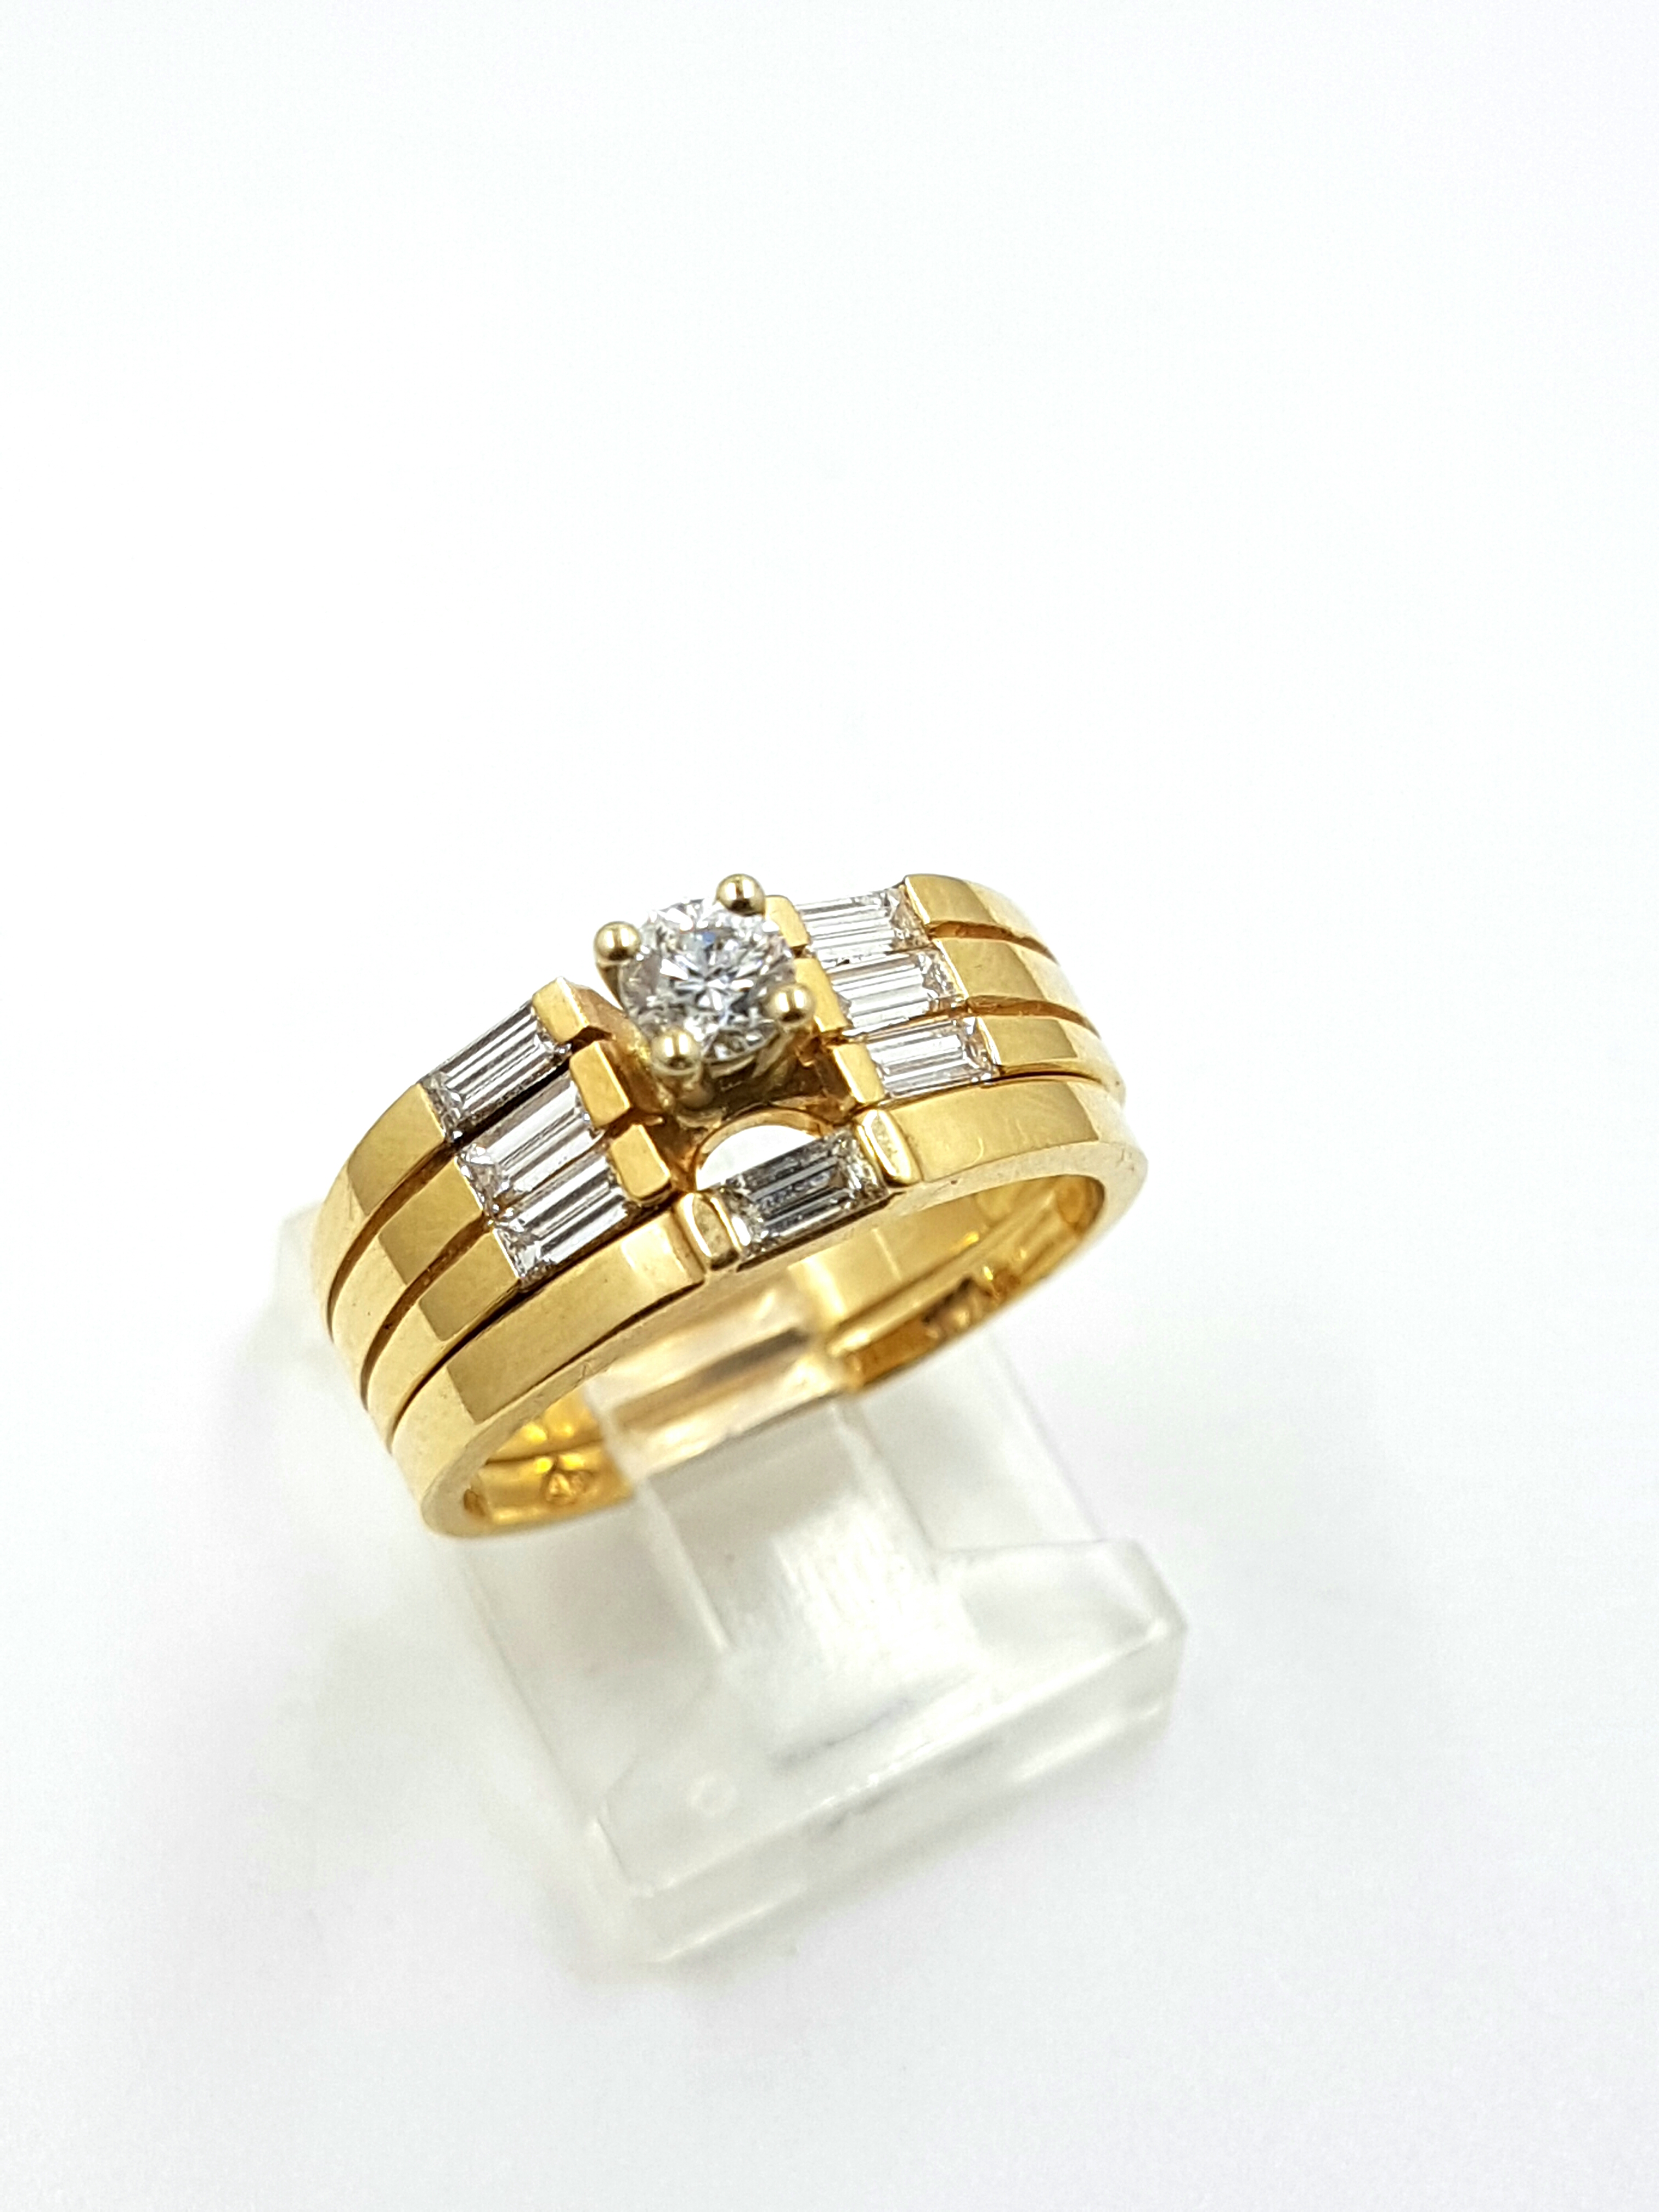 Engagement Ring & Wedding Band
14K Yellow Gold
0.80ct Total
Regular Price $7295
SALE $1995
Ref: DER136+W